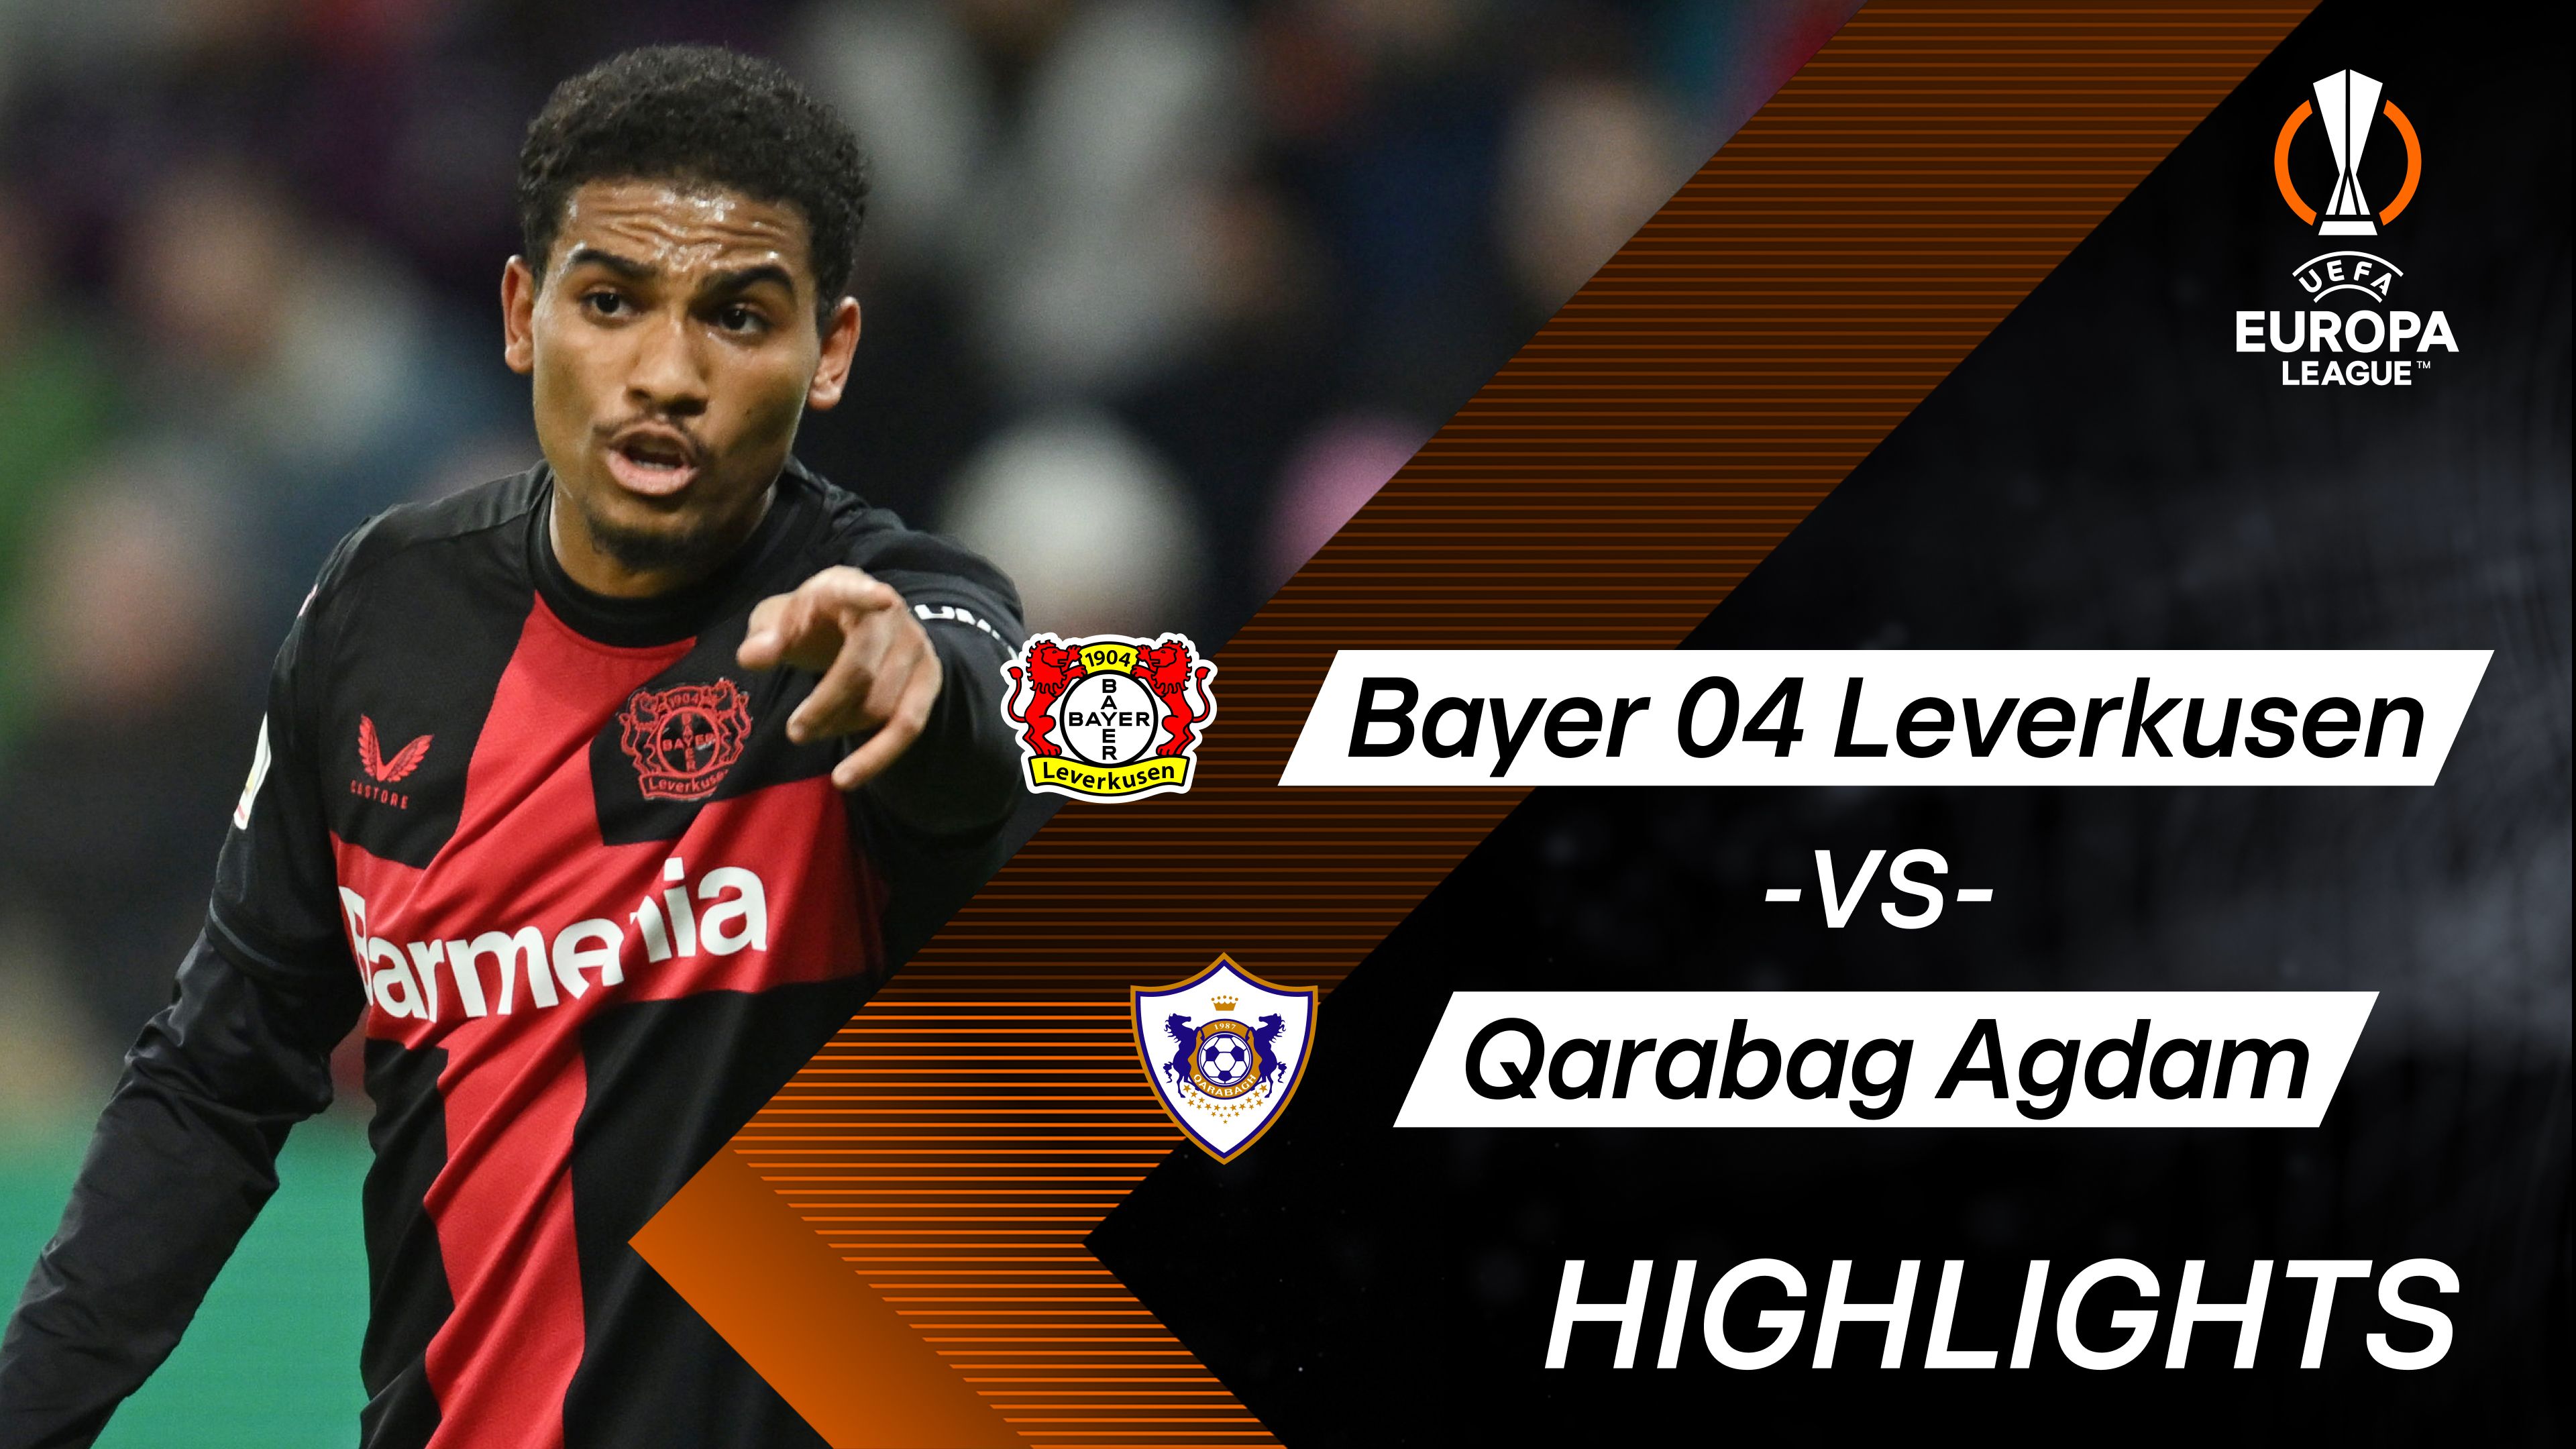 Highlights: Bayer Leverkusen vs. Qarabag Agdam